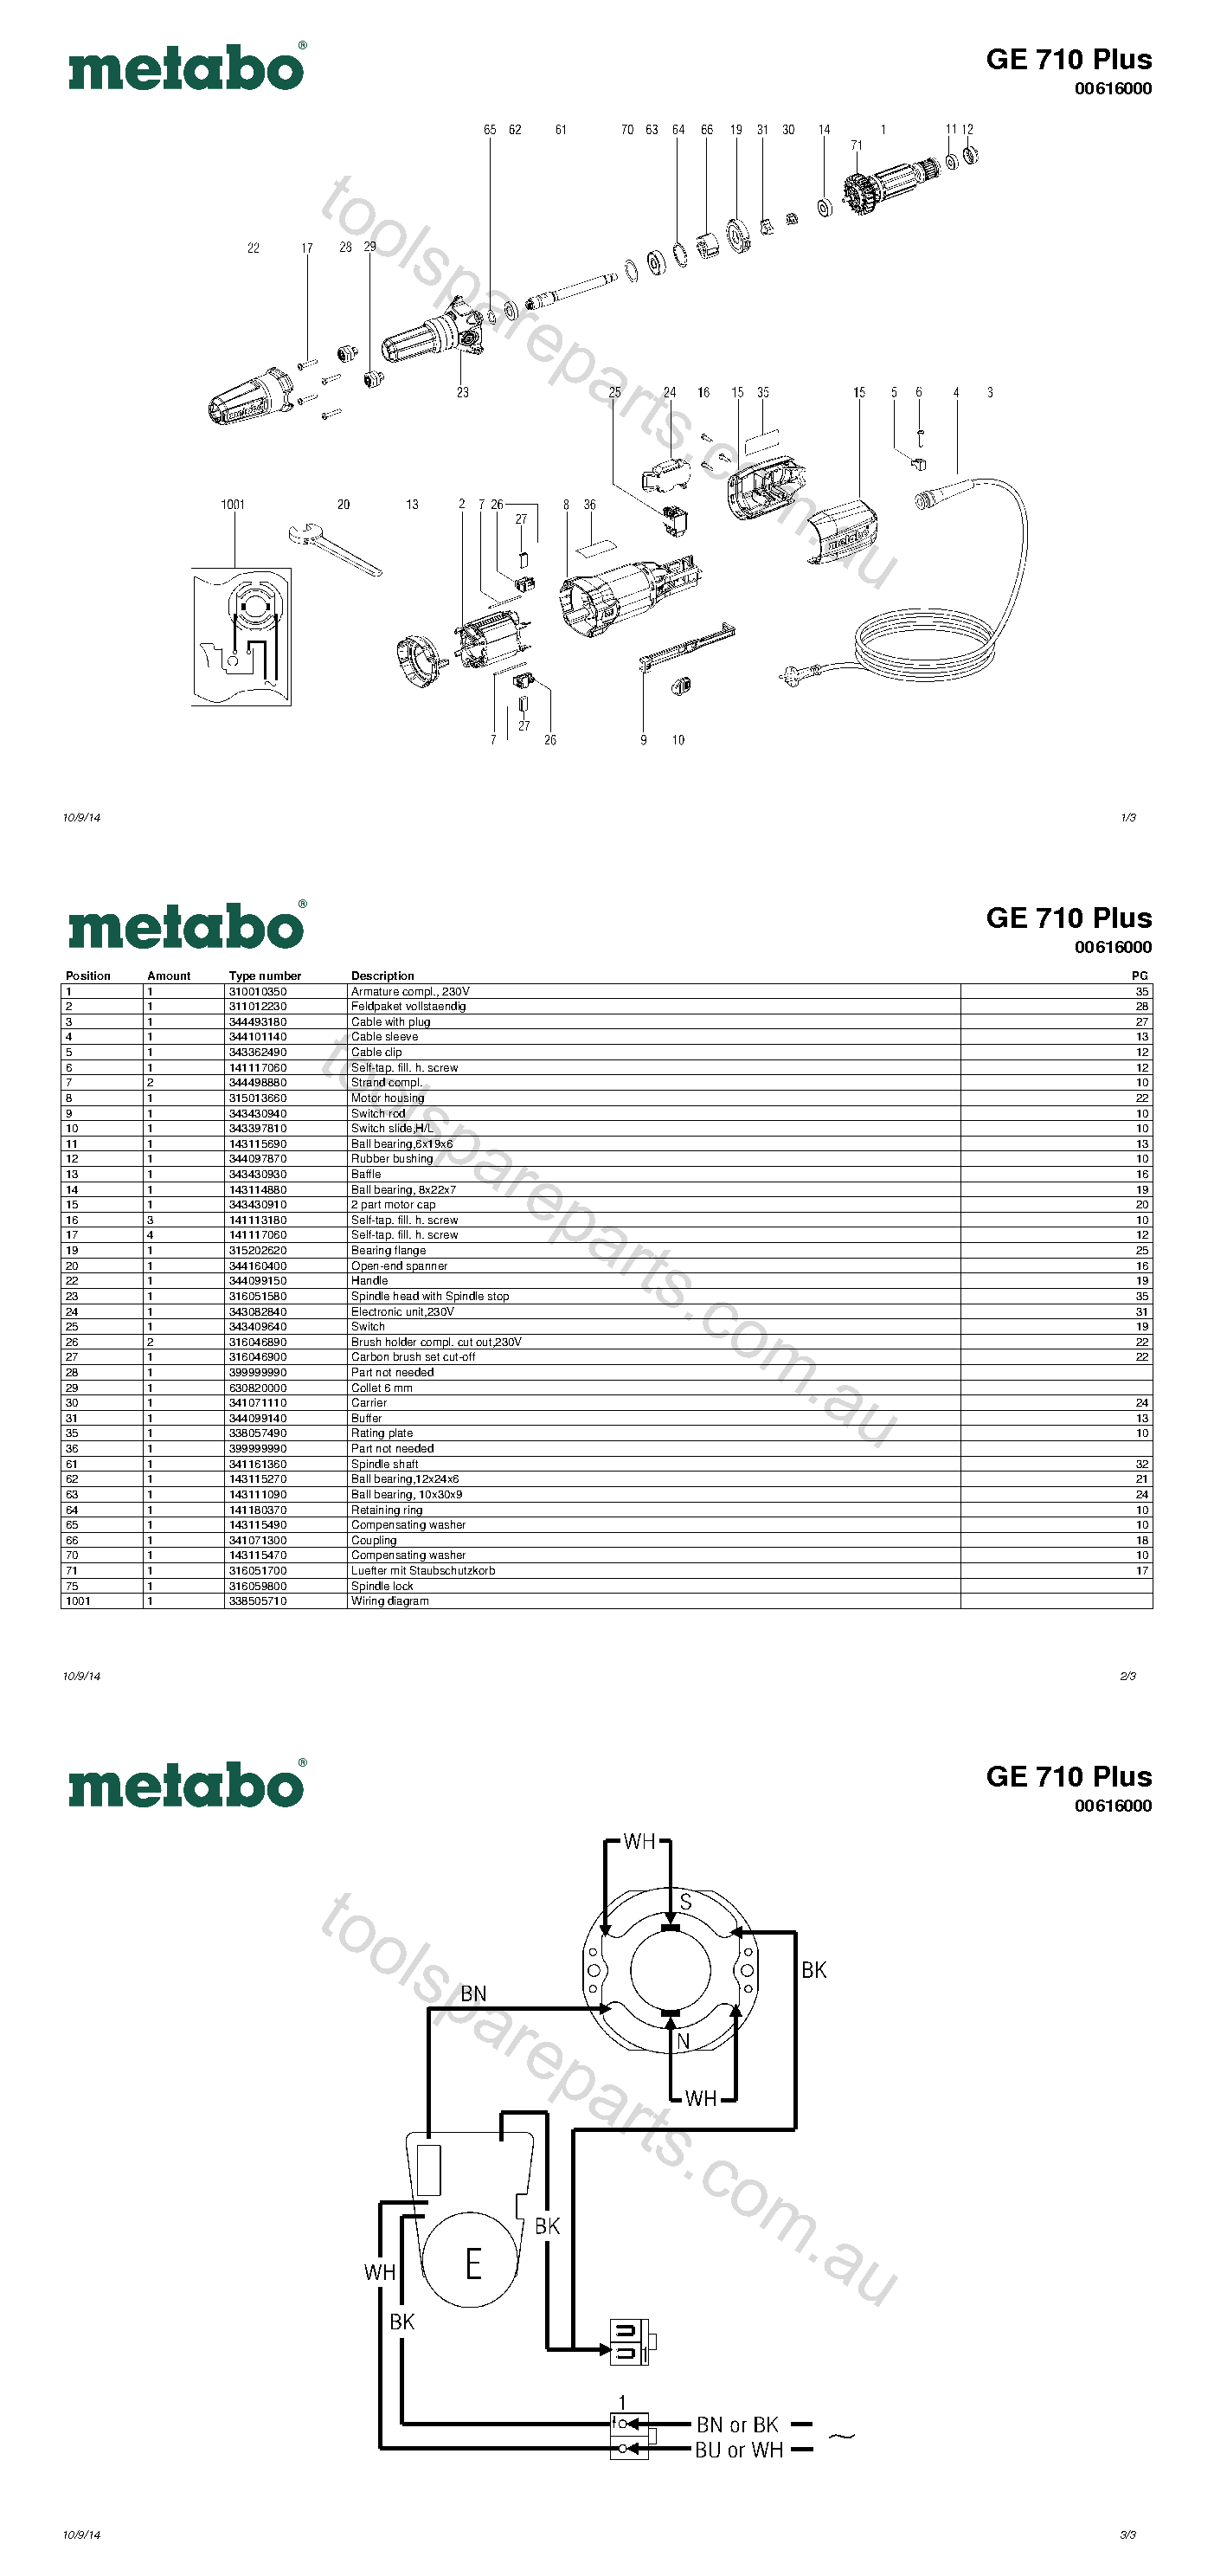 Metabo GE 710 Plus 00616000  Diagram 1